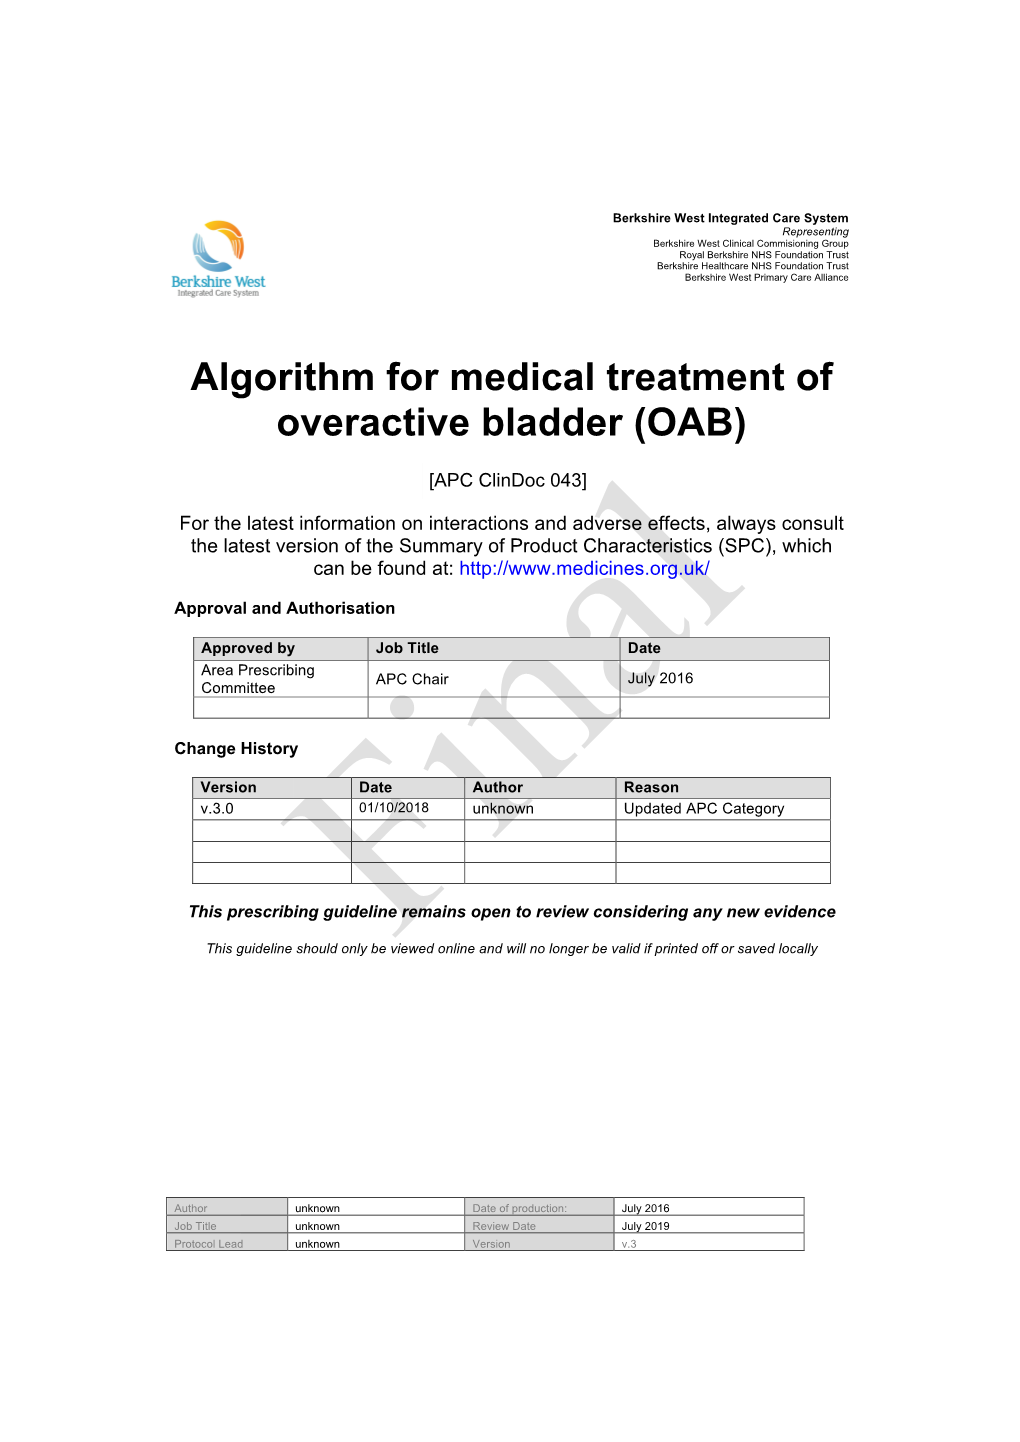 Algorithm for Medical Treatment of Overactive Bladder (OAB)